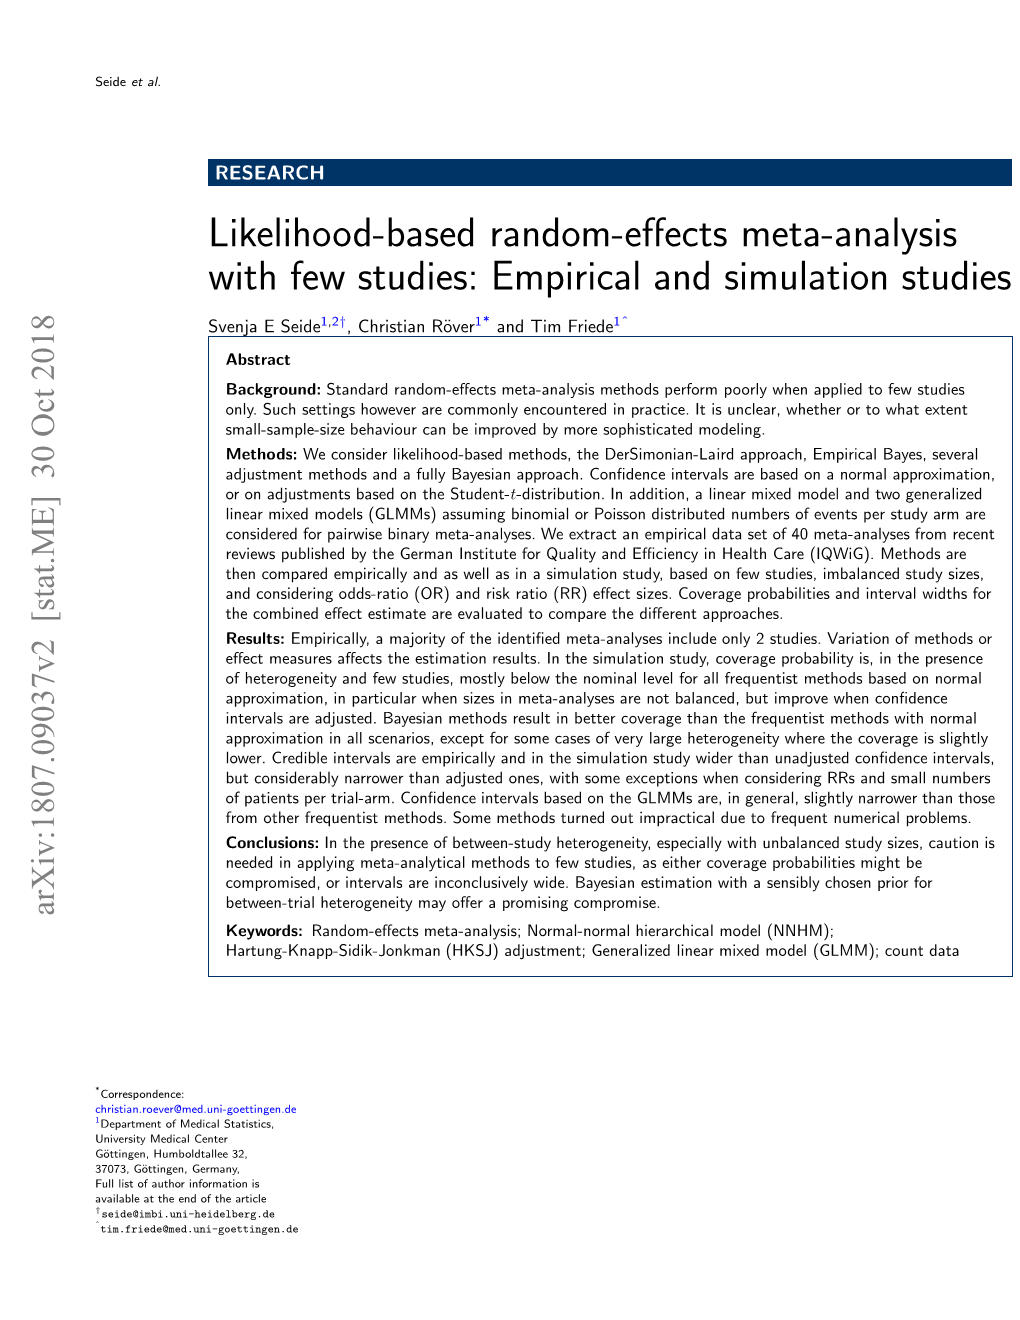 Likelihood-Based Random-Effects Meta-Analysis with Few Studies